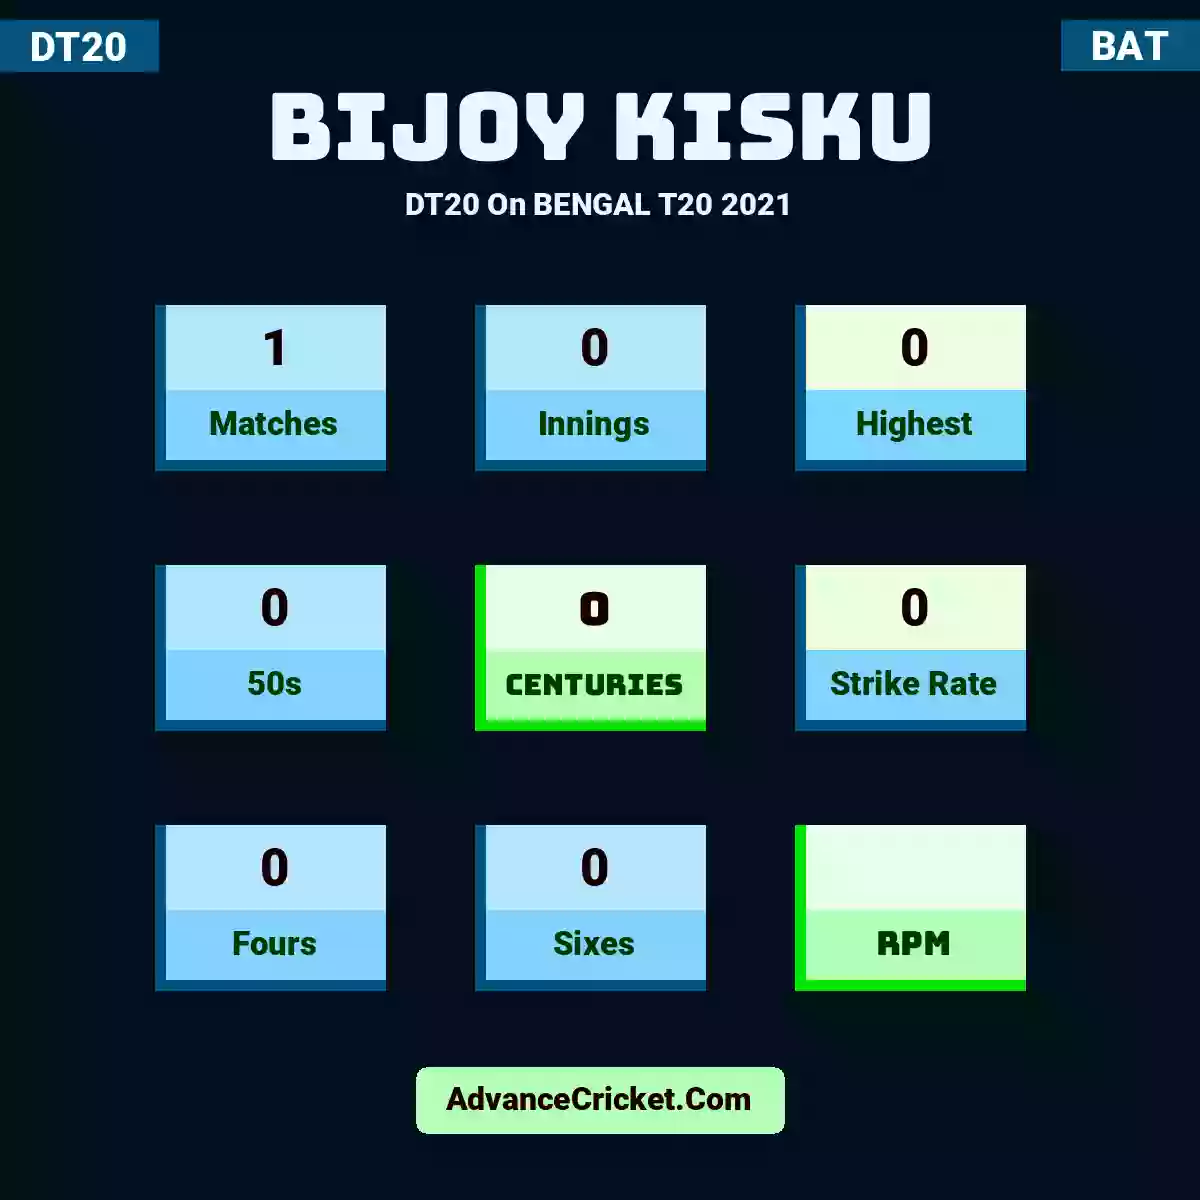 Bijoy kisku DT20  On BENGAL T20 2021, Bijoy kisku played 1 matches, scored 0 runs as highest, 0 half-centuries, and 0 centuries, with a strike rate of 0. B.kisku hit 0 fours and 0 sixes.